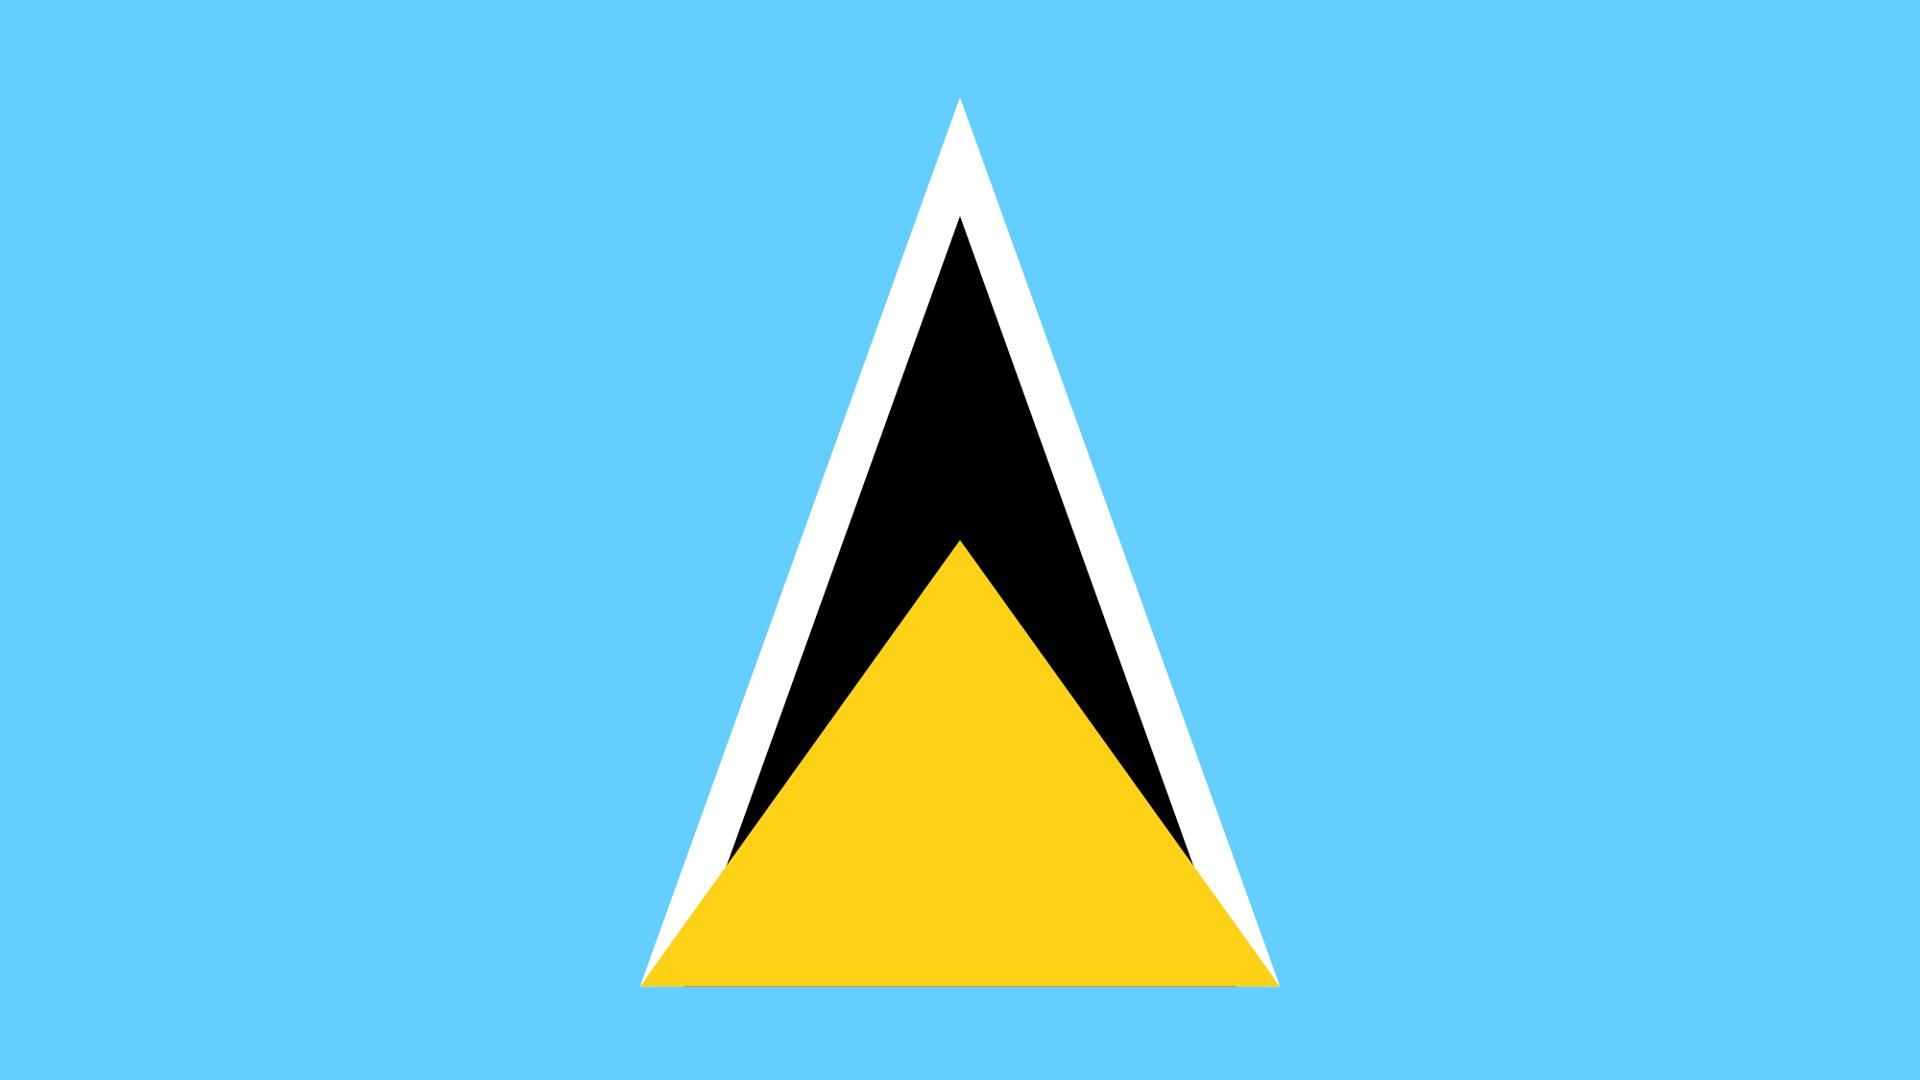 Saint Lucia Flag, High Definition, High Quality, Widescreen